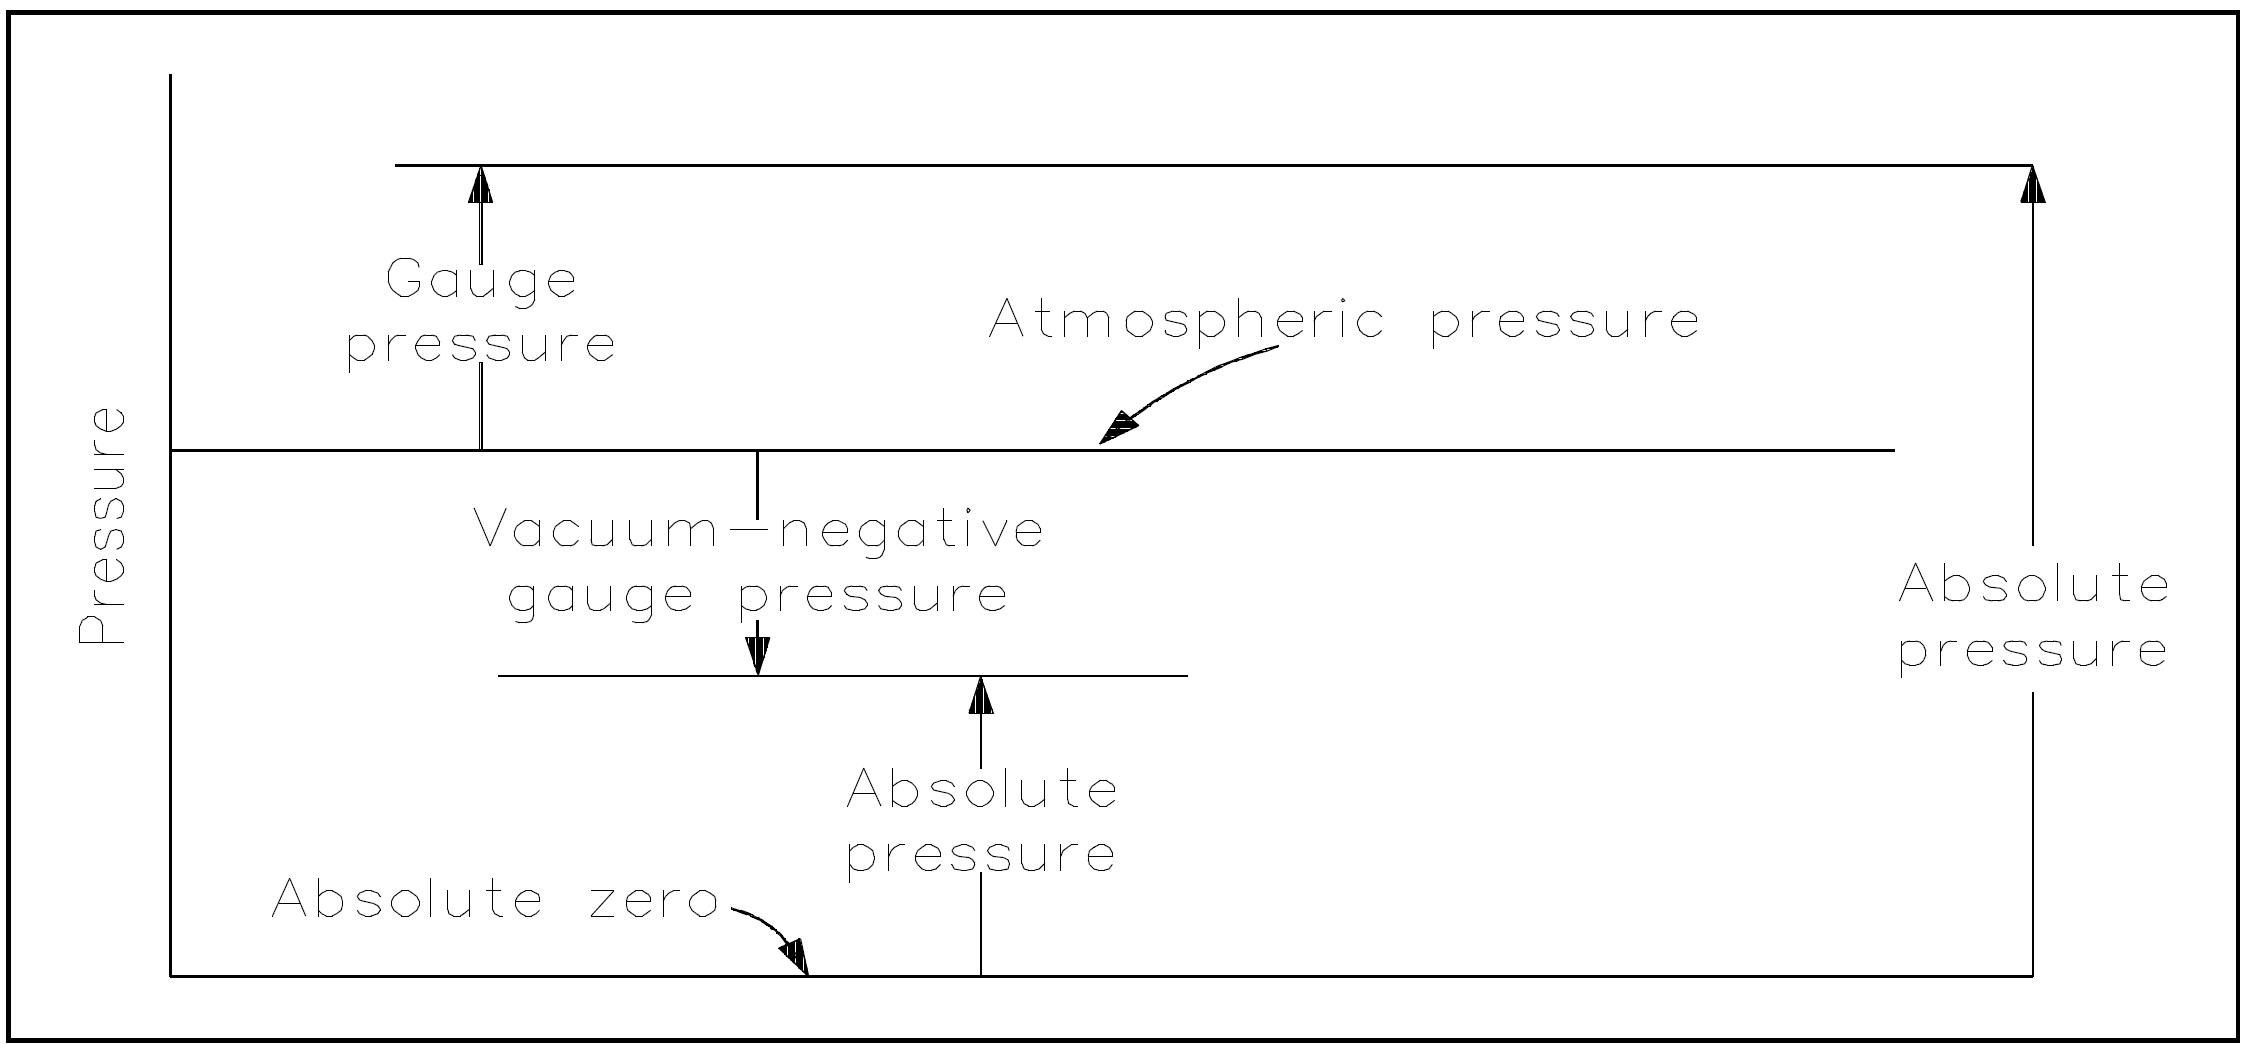 Figure 2: Pressure Relationships